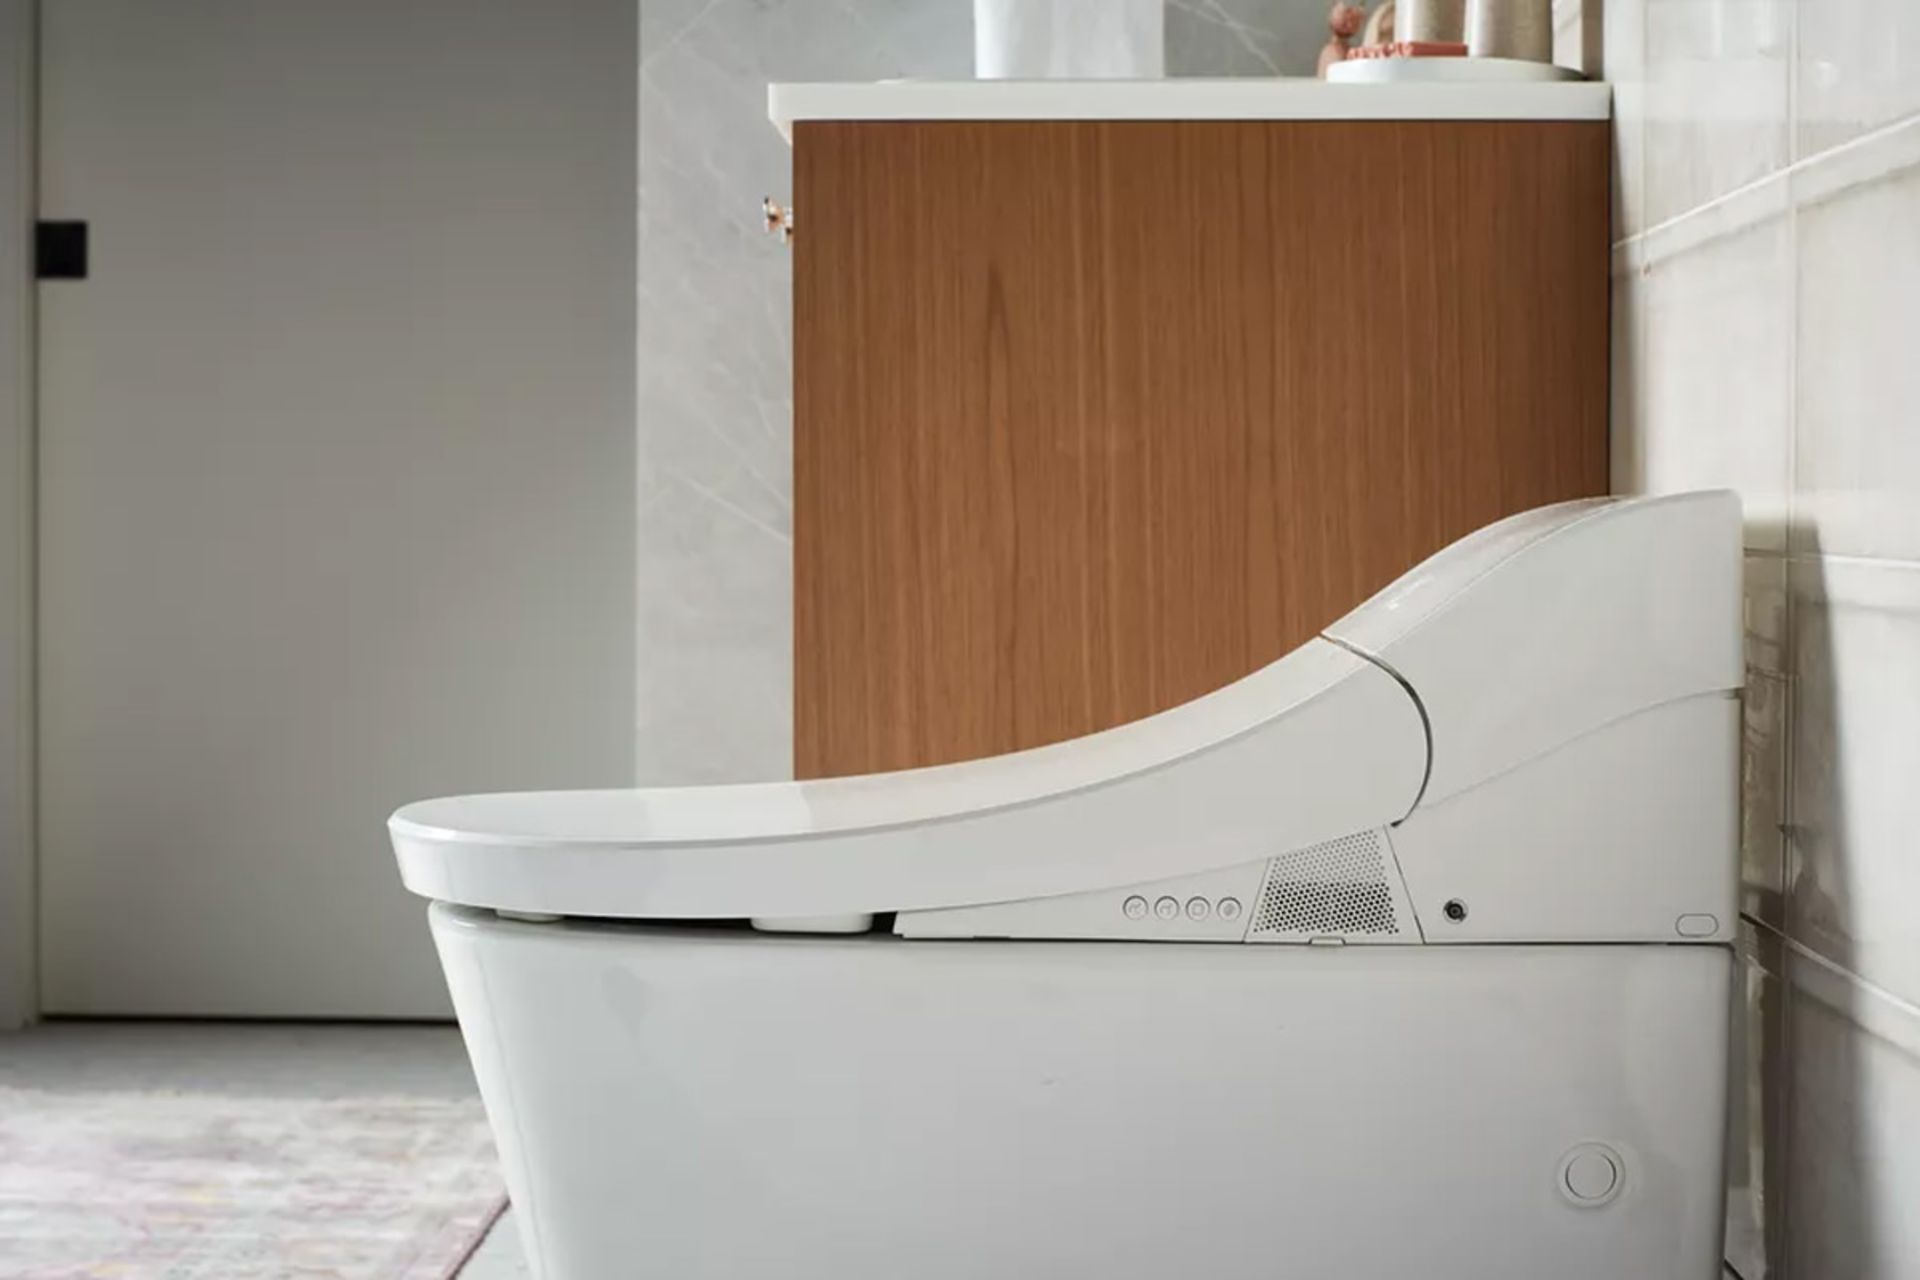 مرجع متخصصين ايران نماي نيم رخ توالت هوشمند كولر Innate Intelligent Toilet 